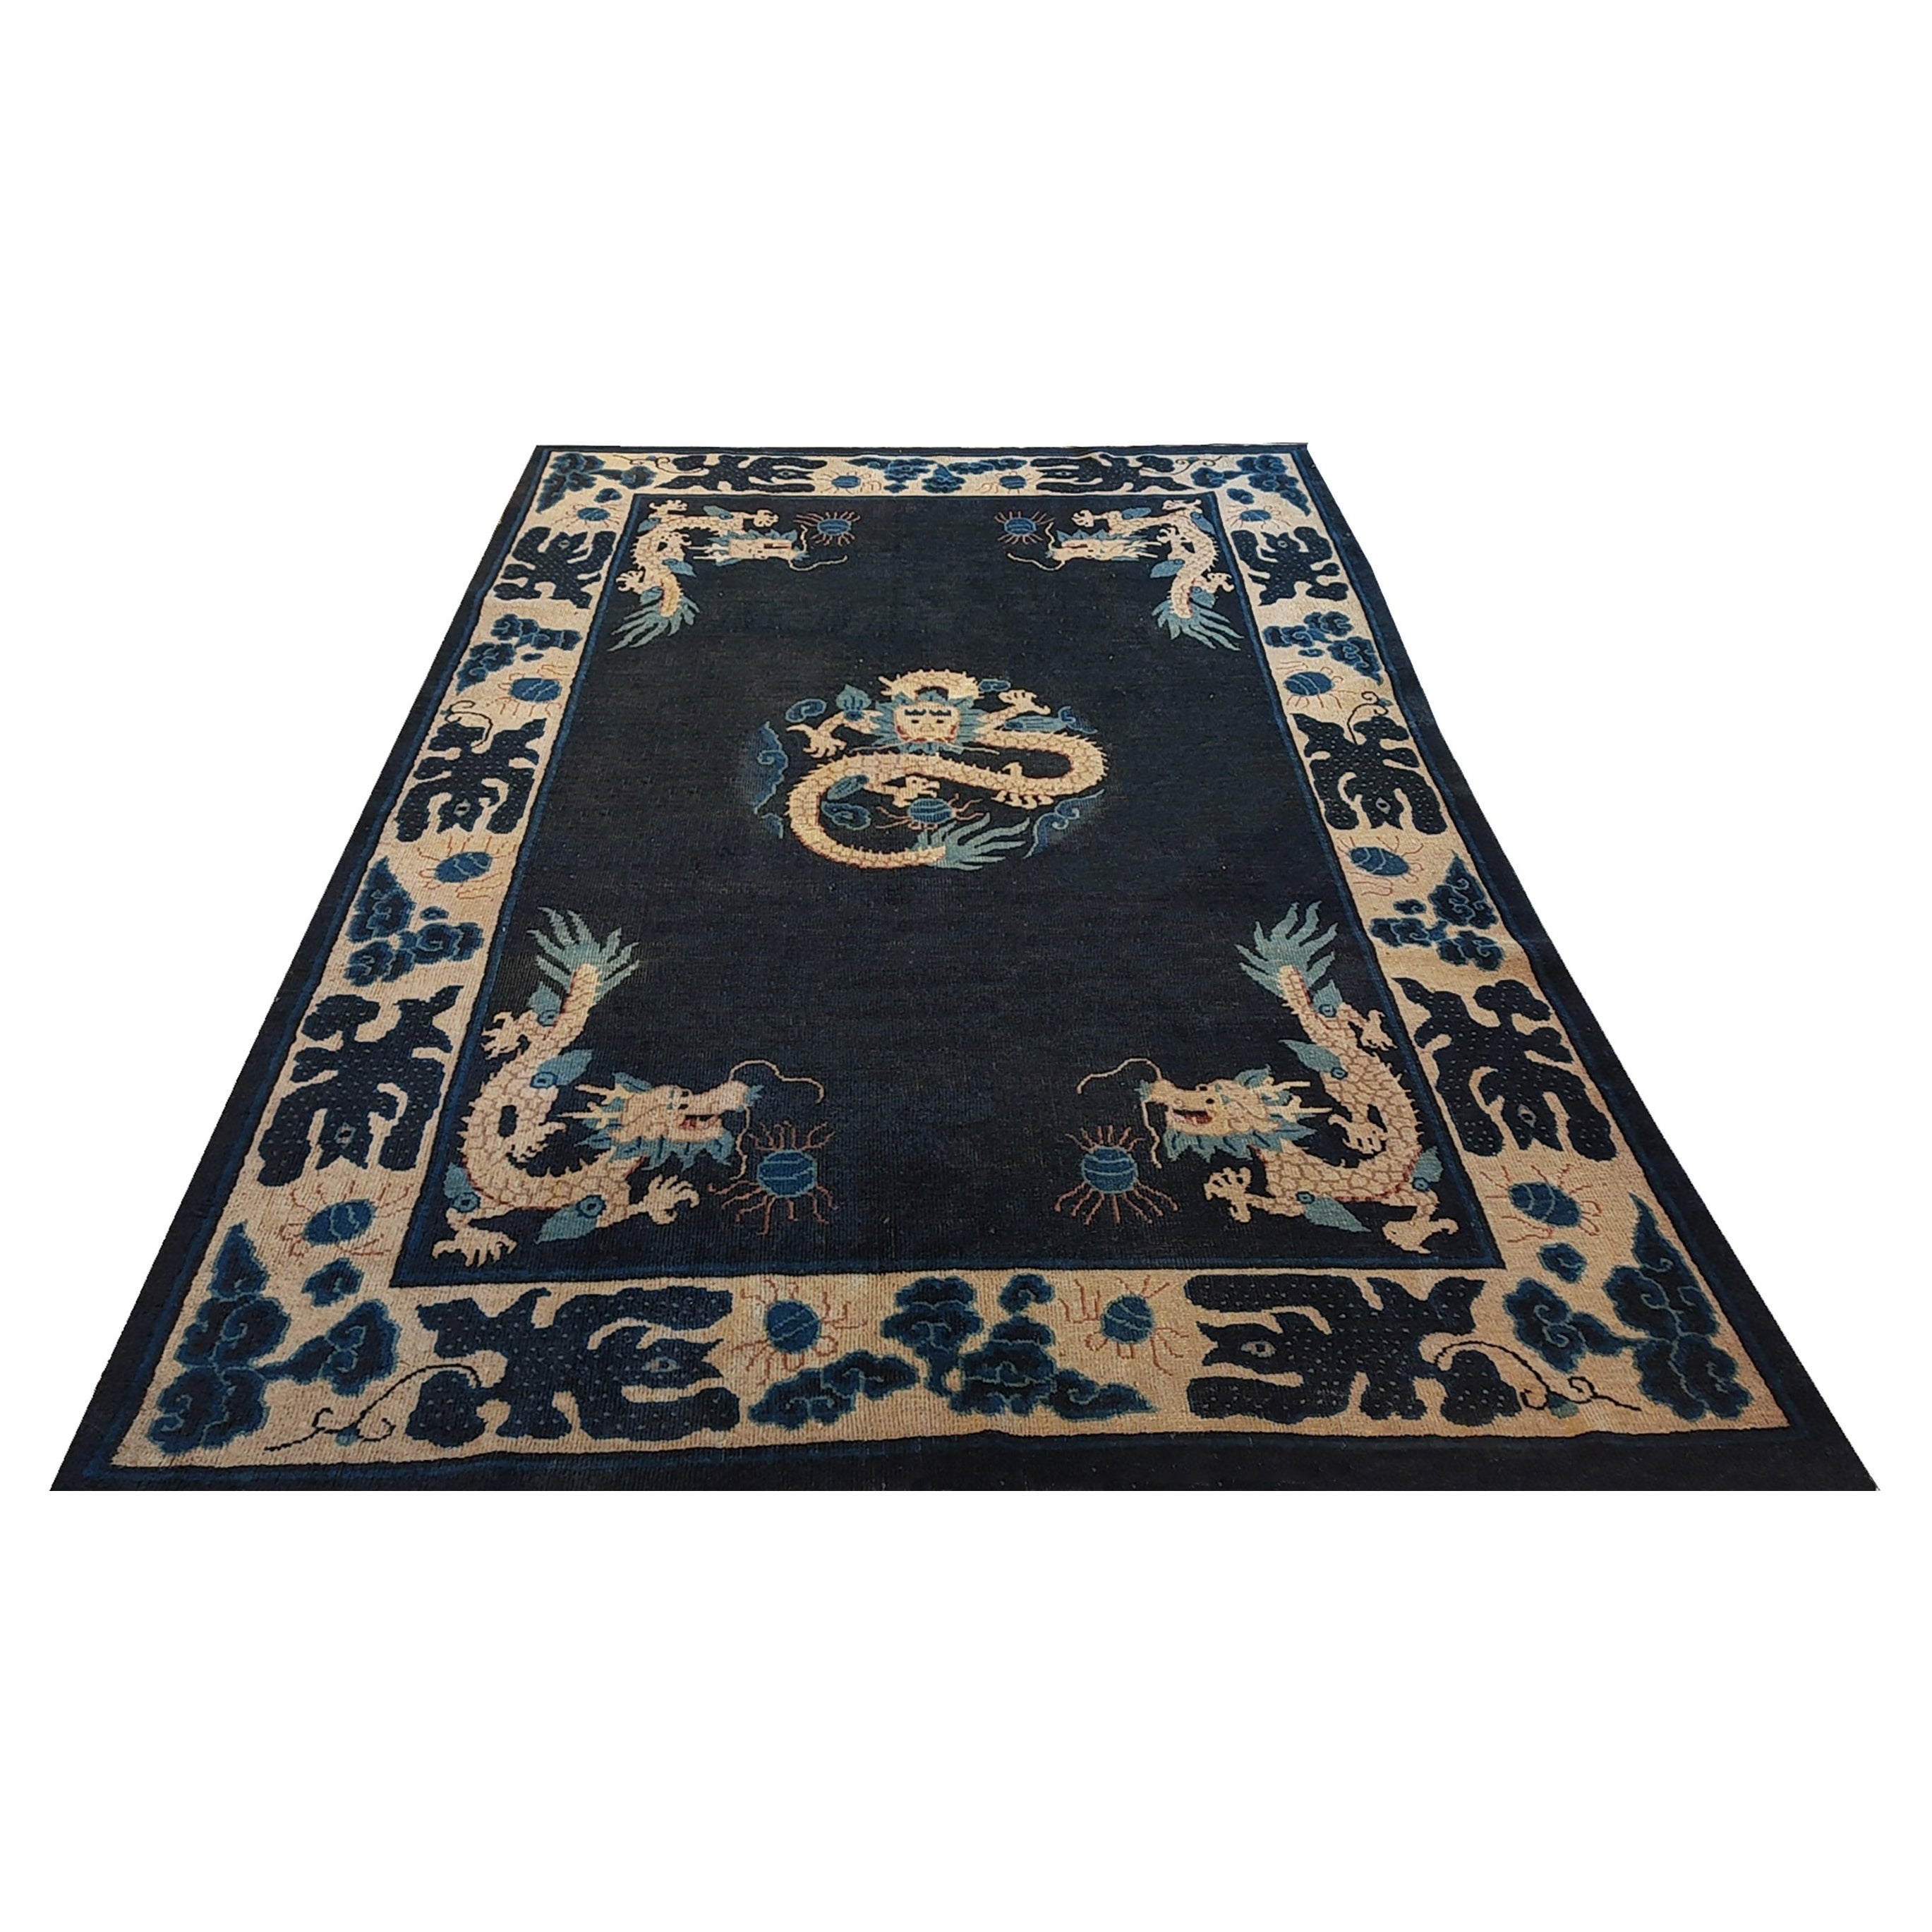 Late 19th Century Chinese Ningxia Dragon Carpet ( 6' x 8' 8'' - 183 x 265 )